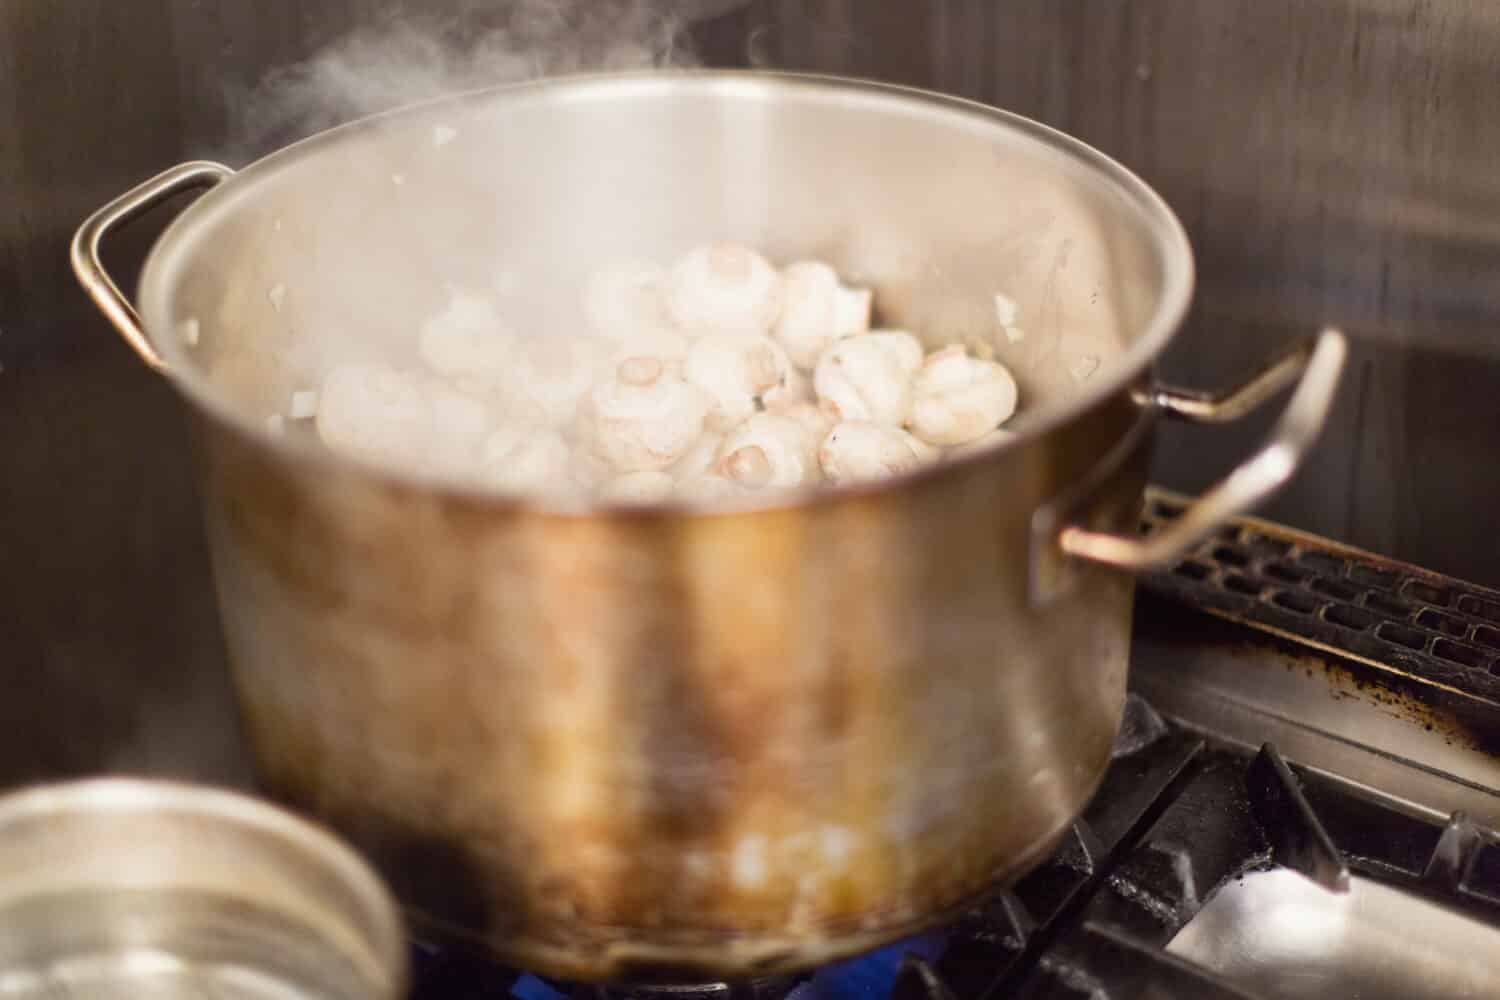 Mushrooms boiling away in a pot.